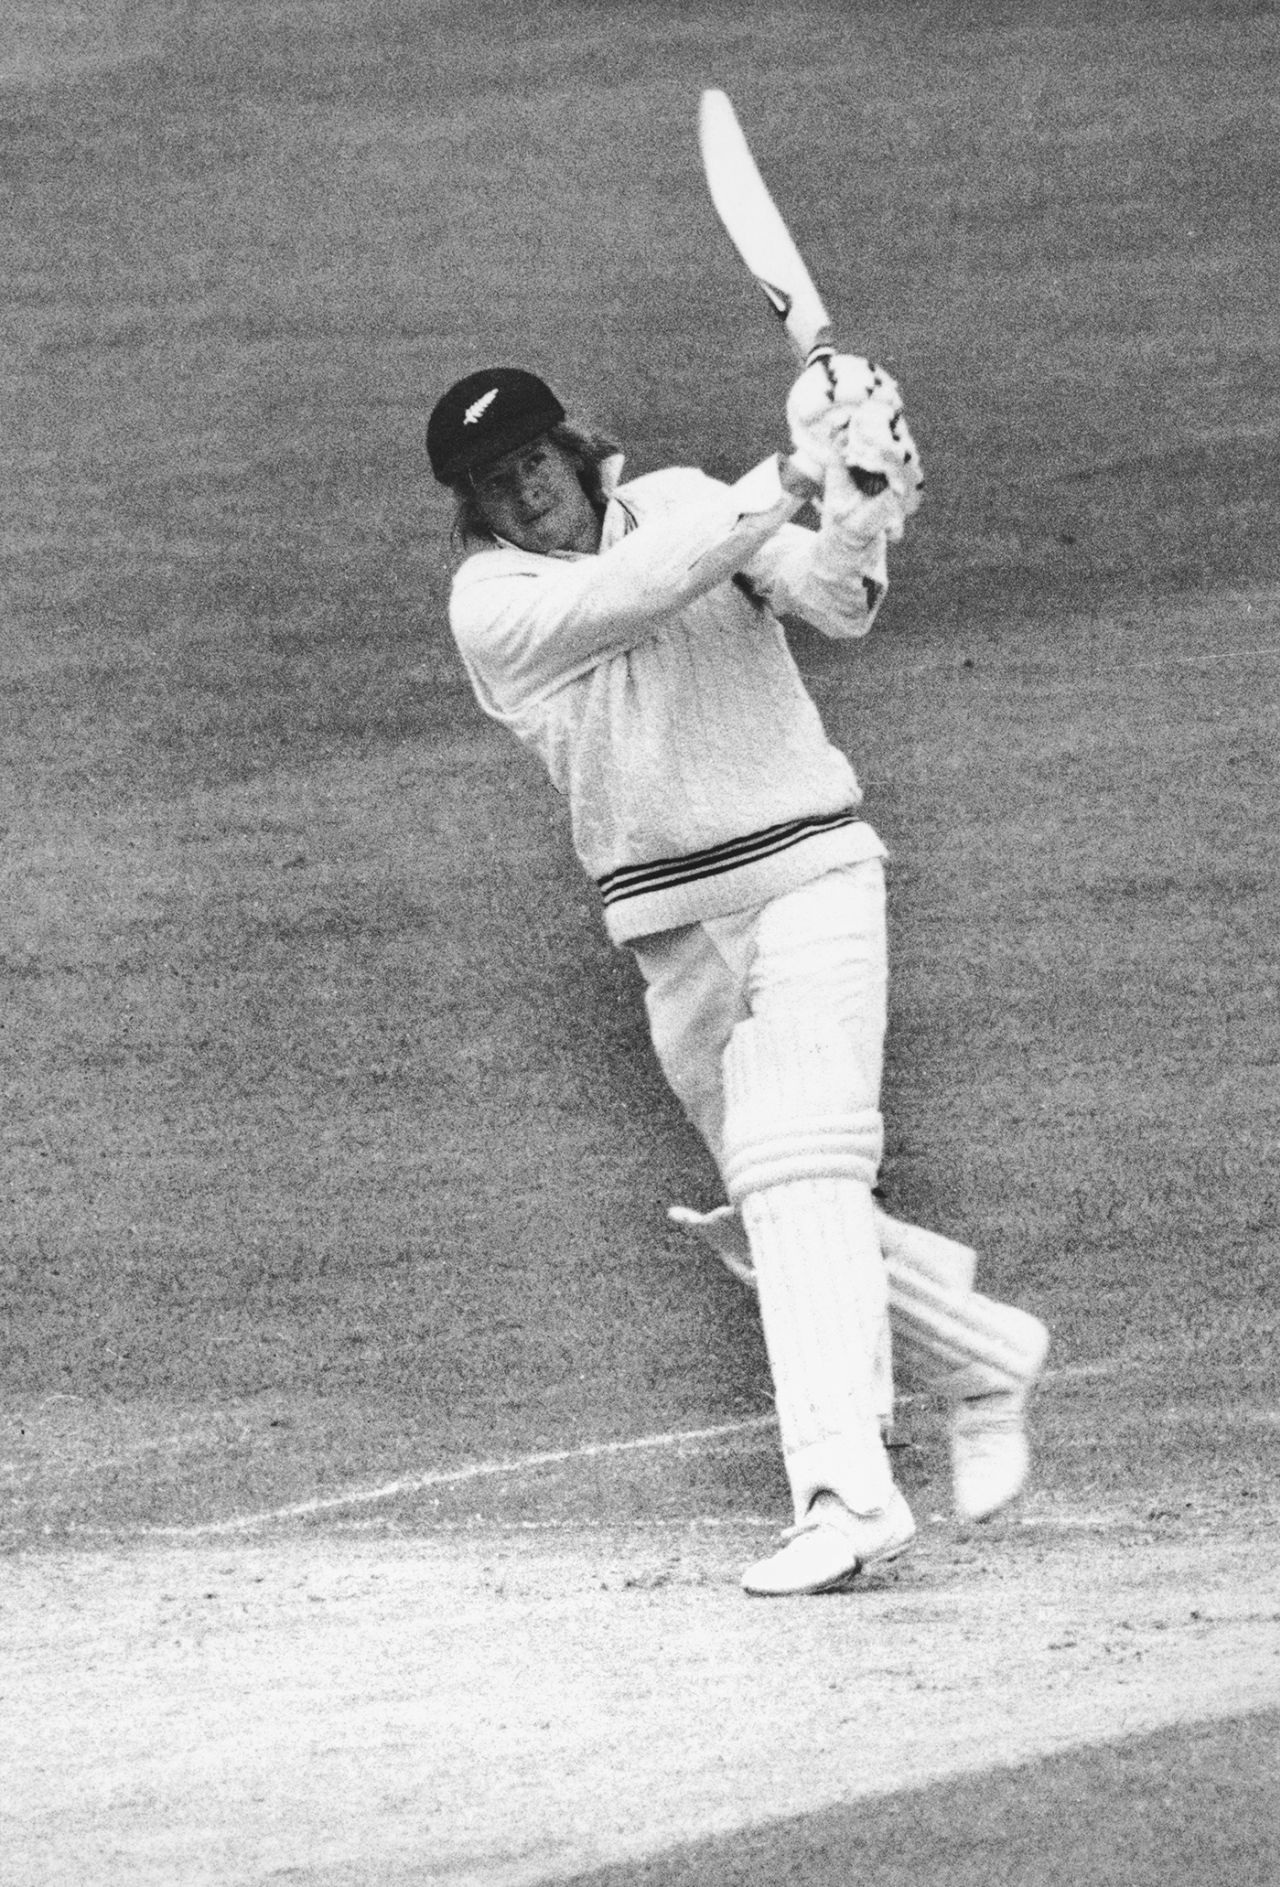  New Zealand captain Glenn Turner batting, circa 1973